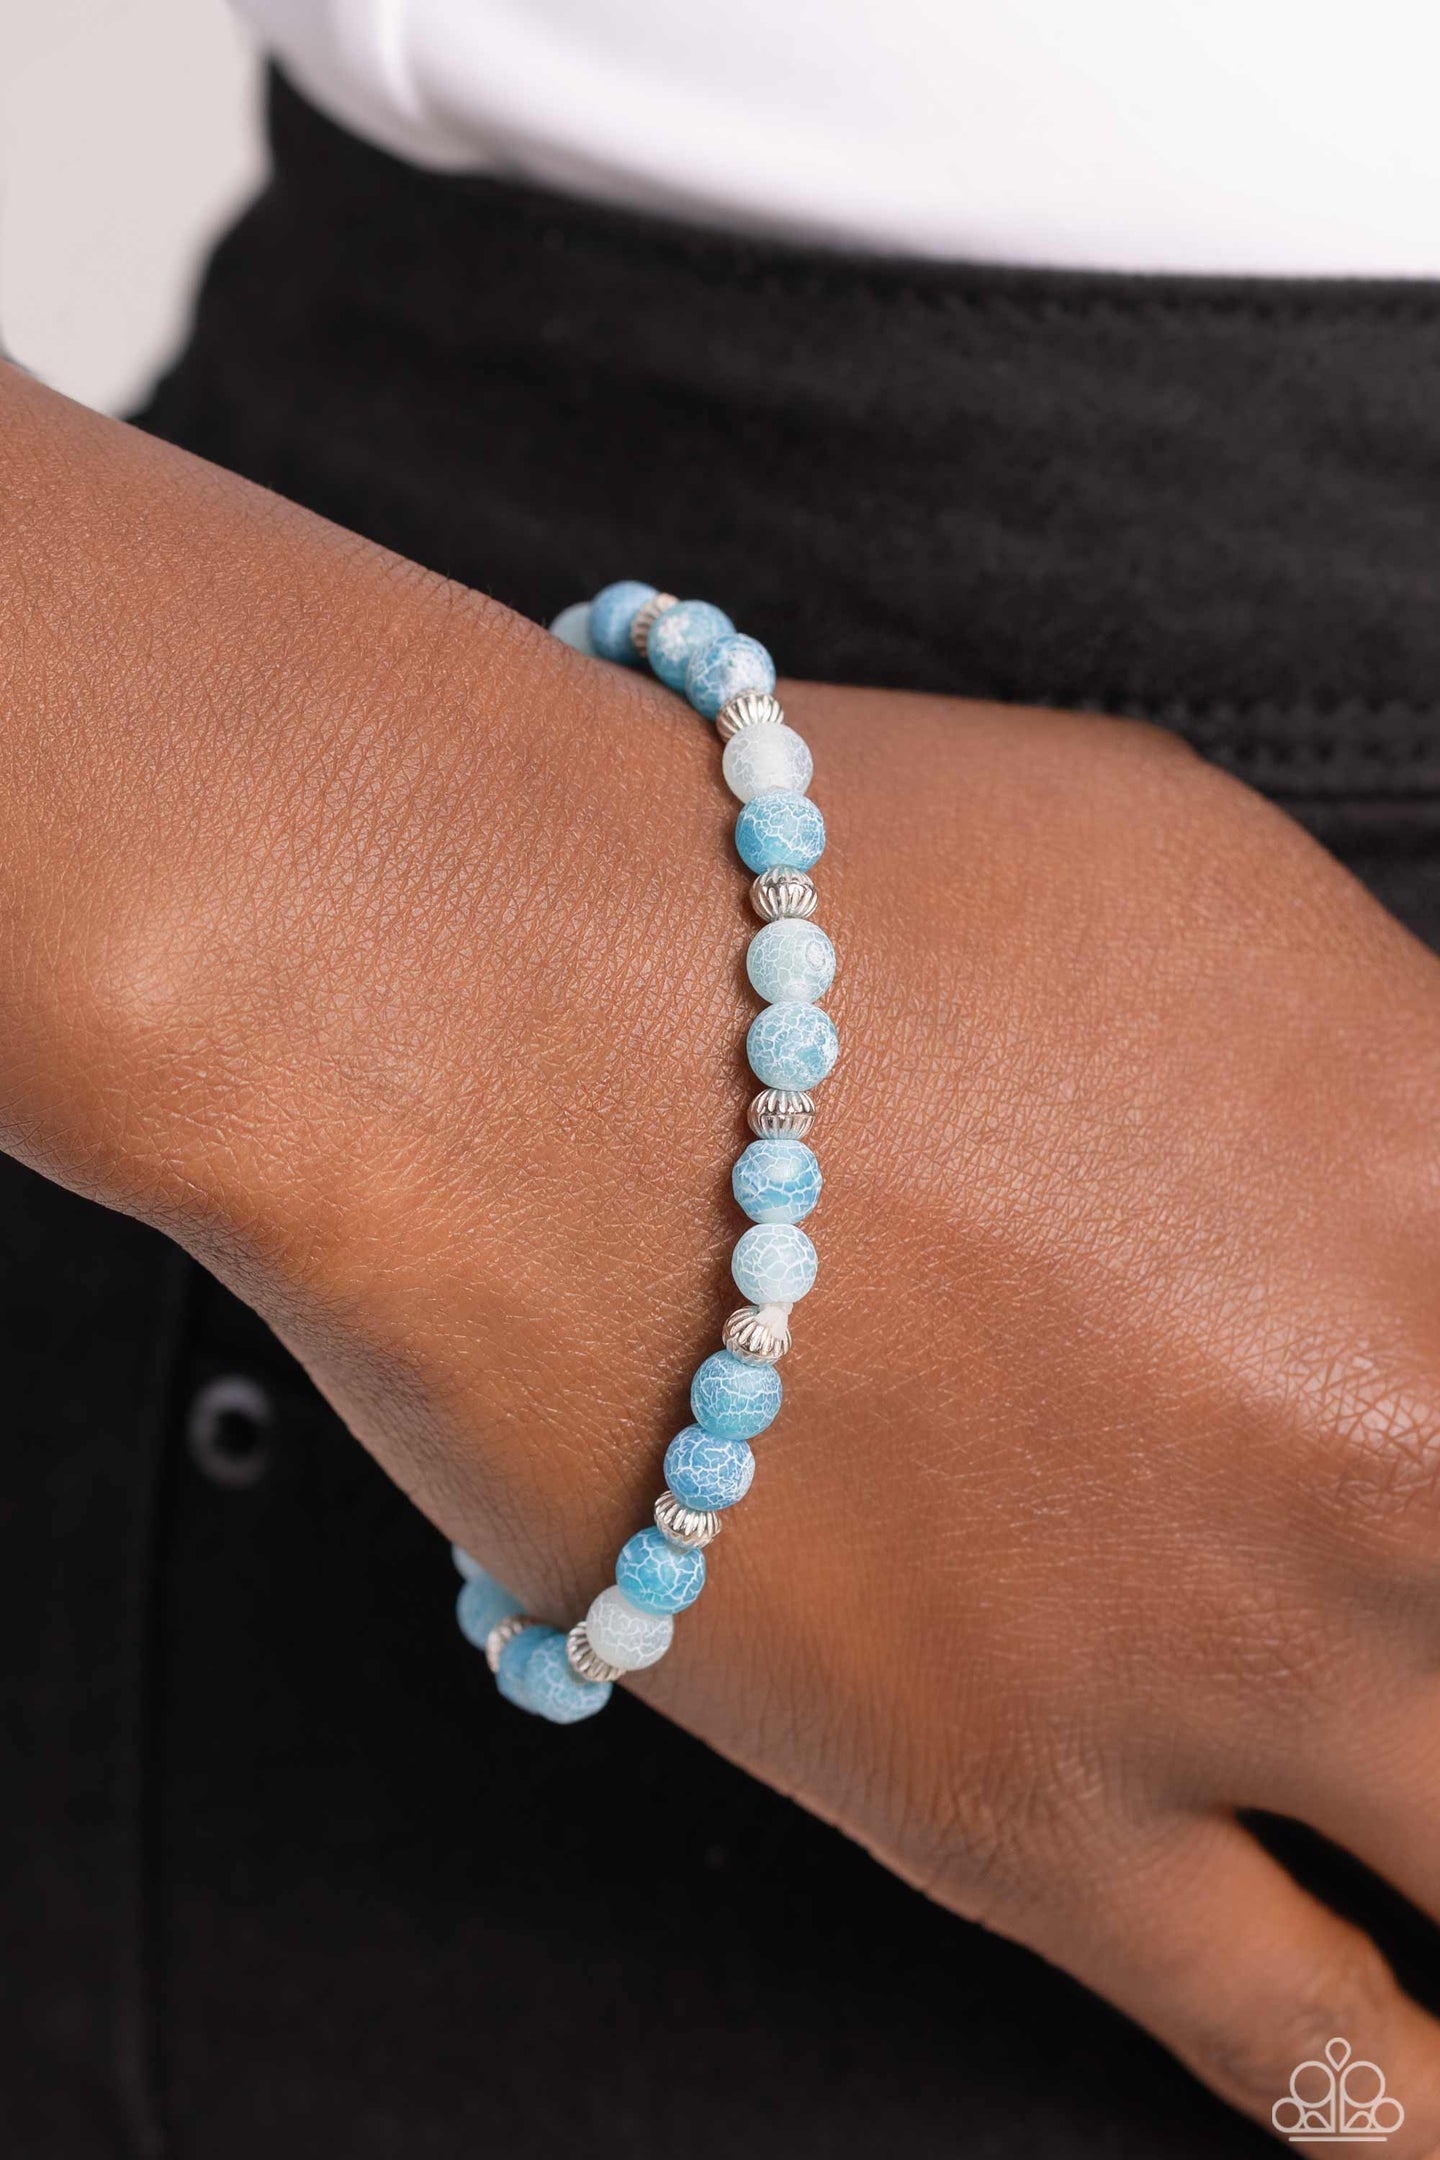 Ethereally Earthy - Blue bracelet